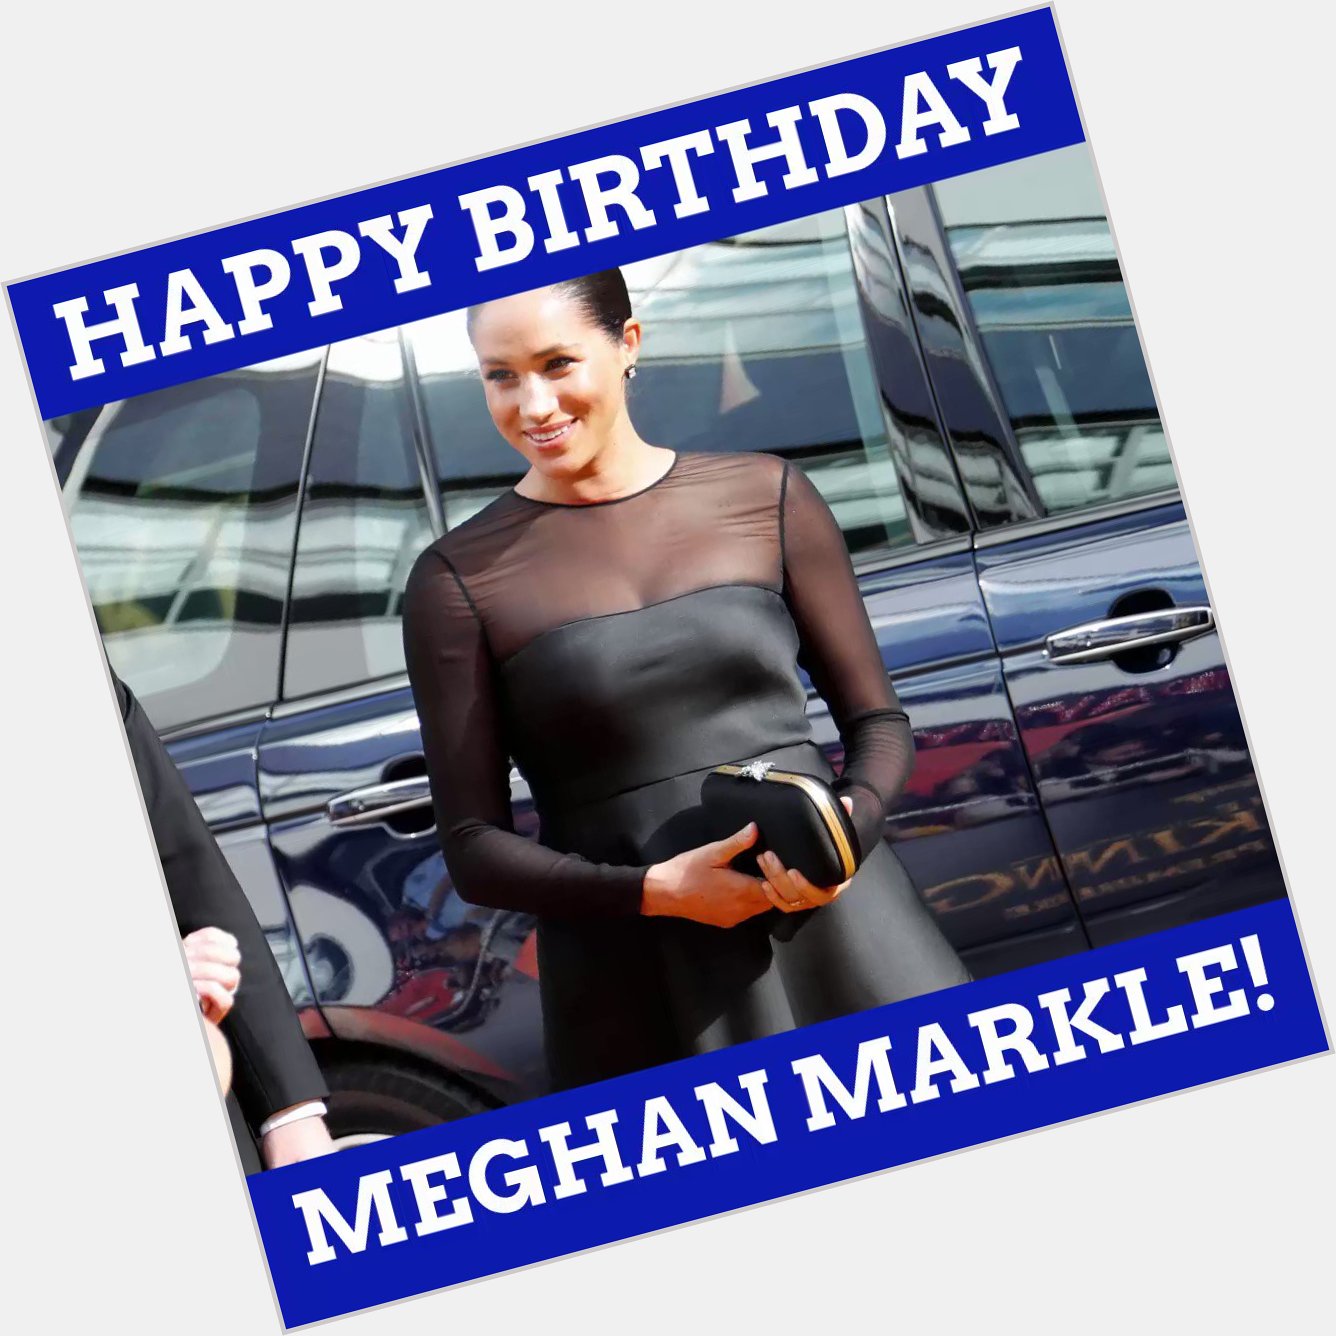 Happy birthday, Meghan Markle!  